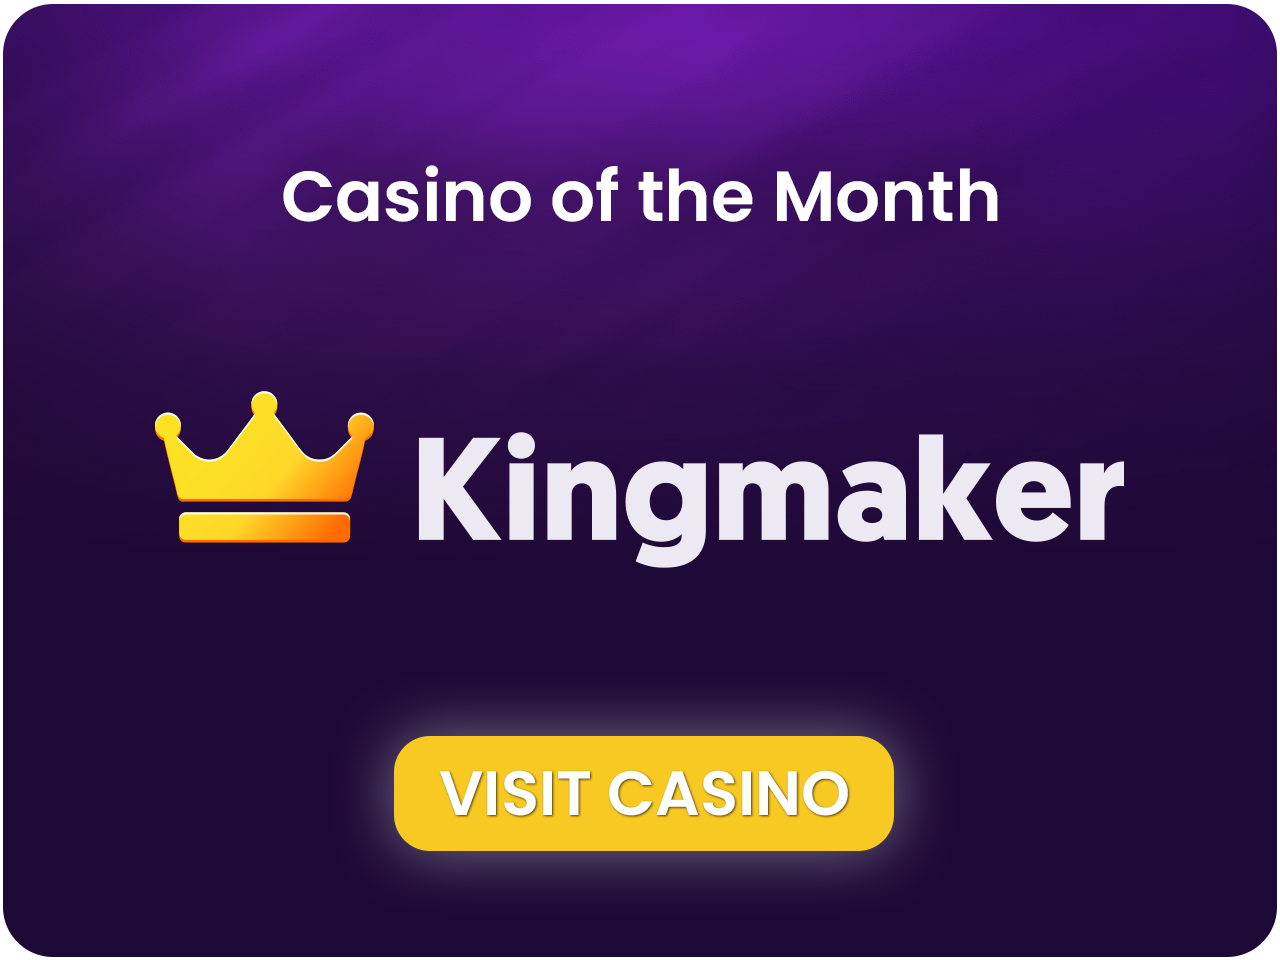 Casino Kingmaker del mes